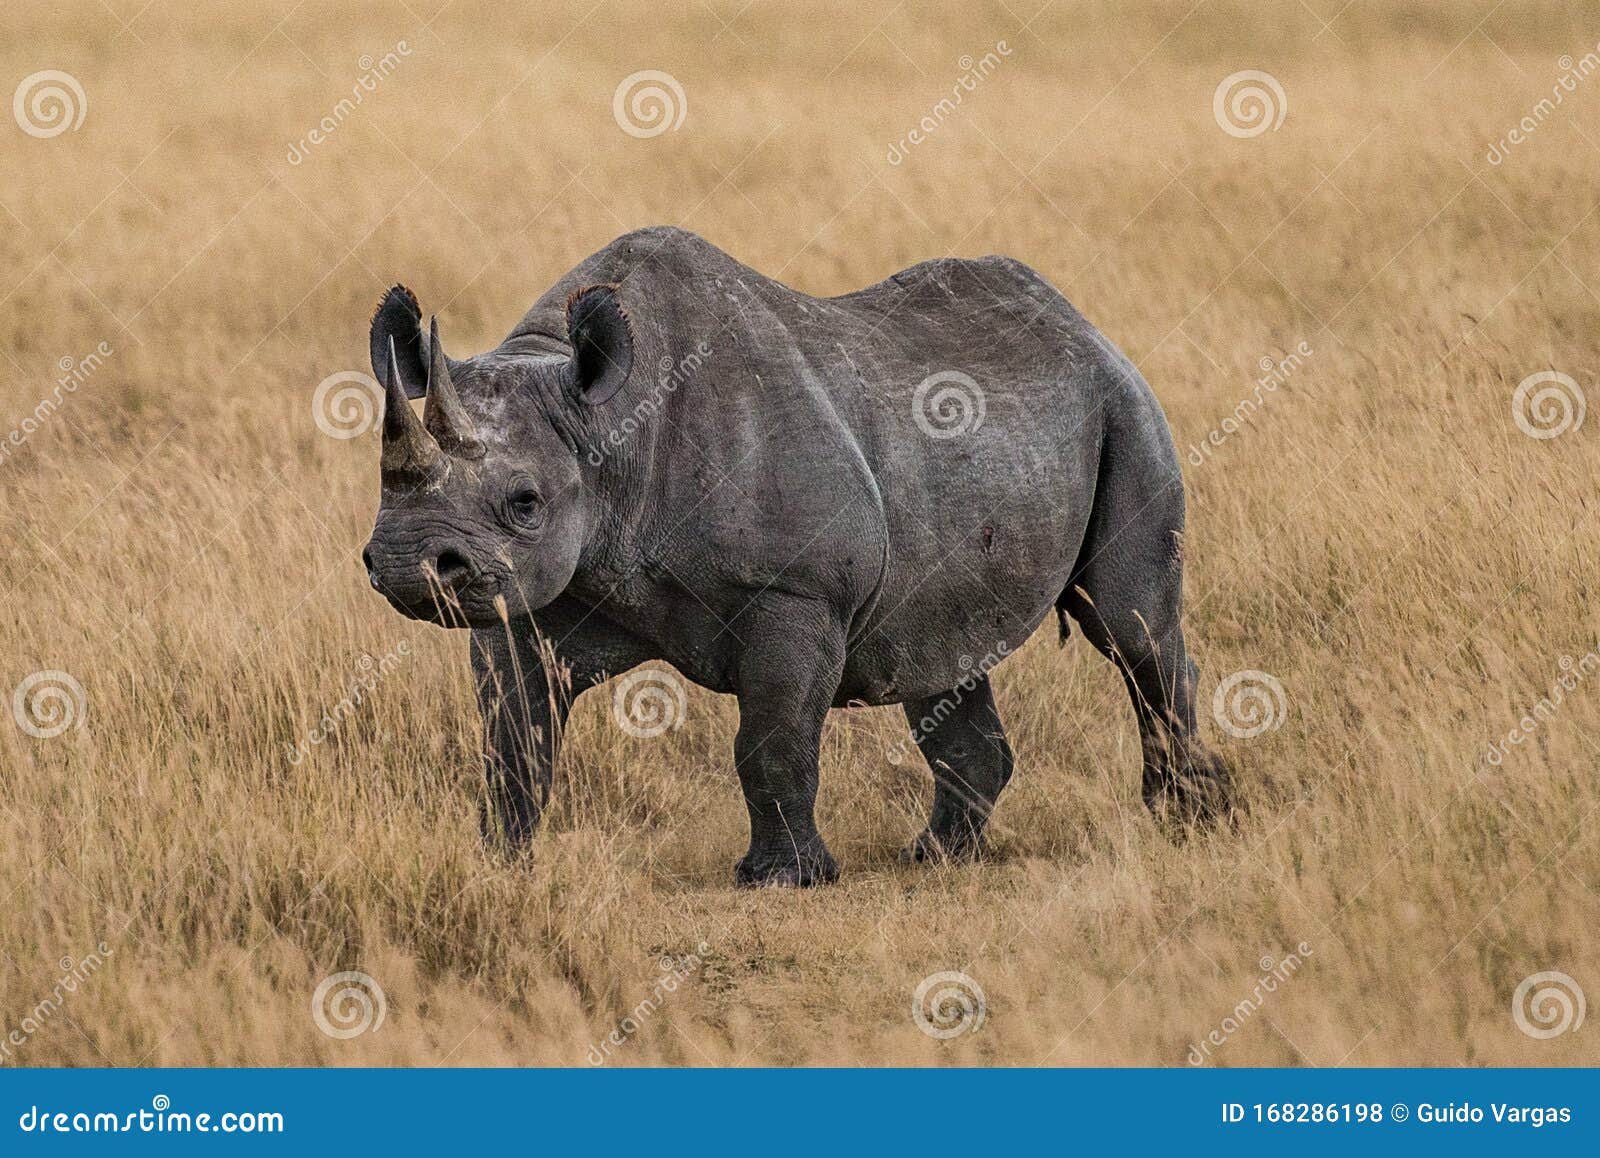 tanzania, africa, animal and landscape, rhinoceros